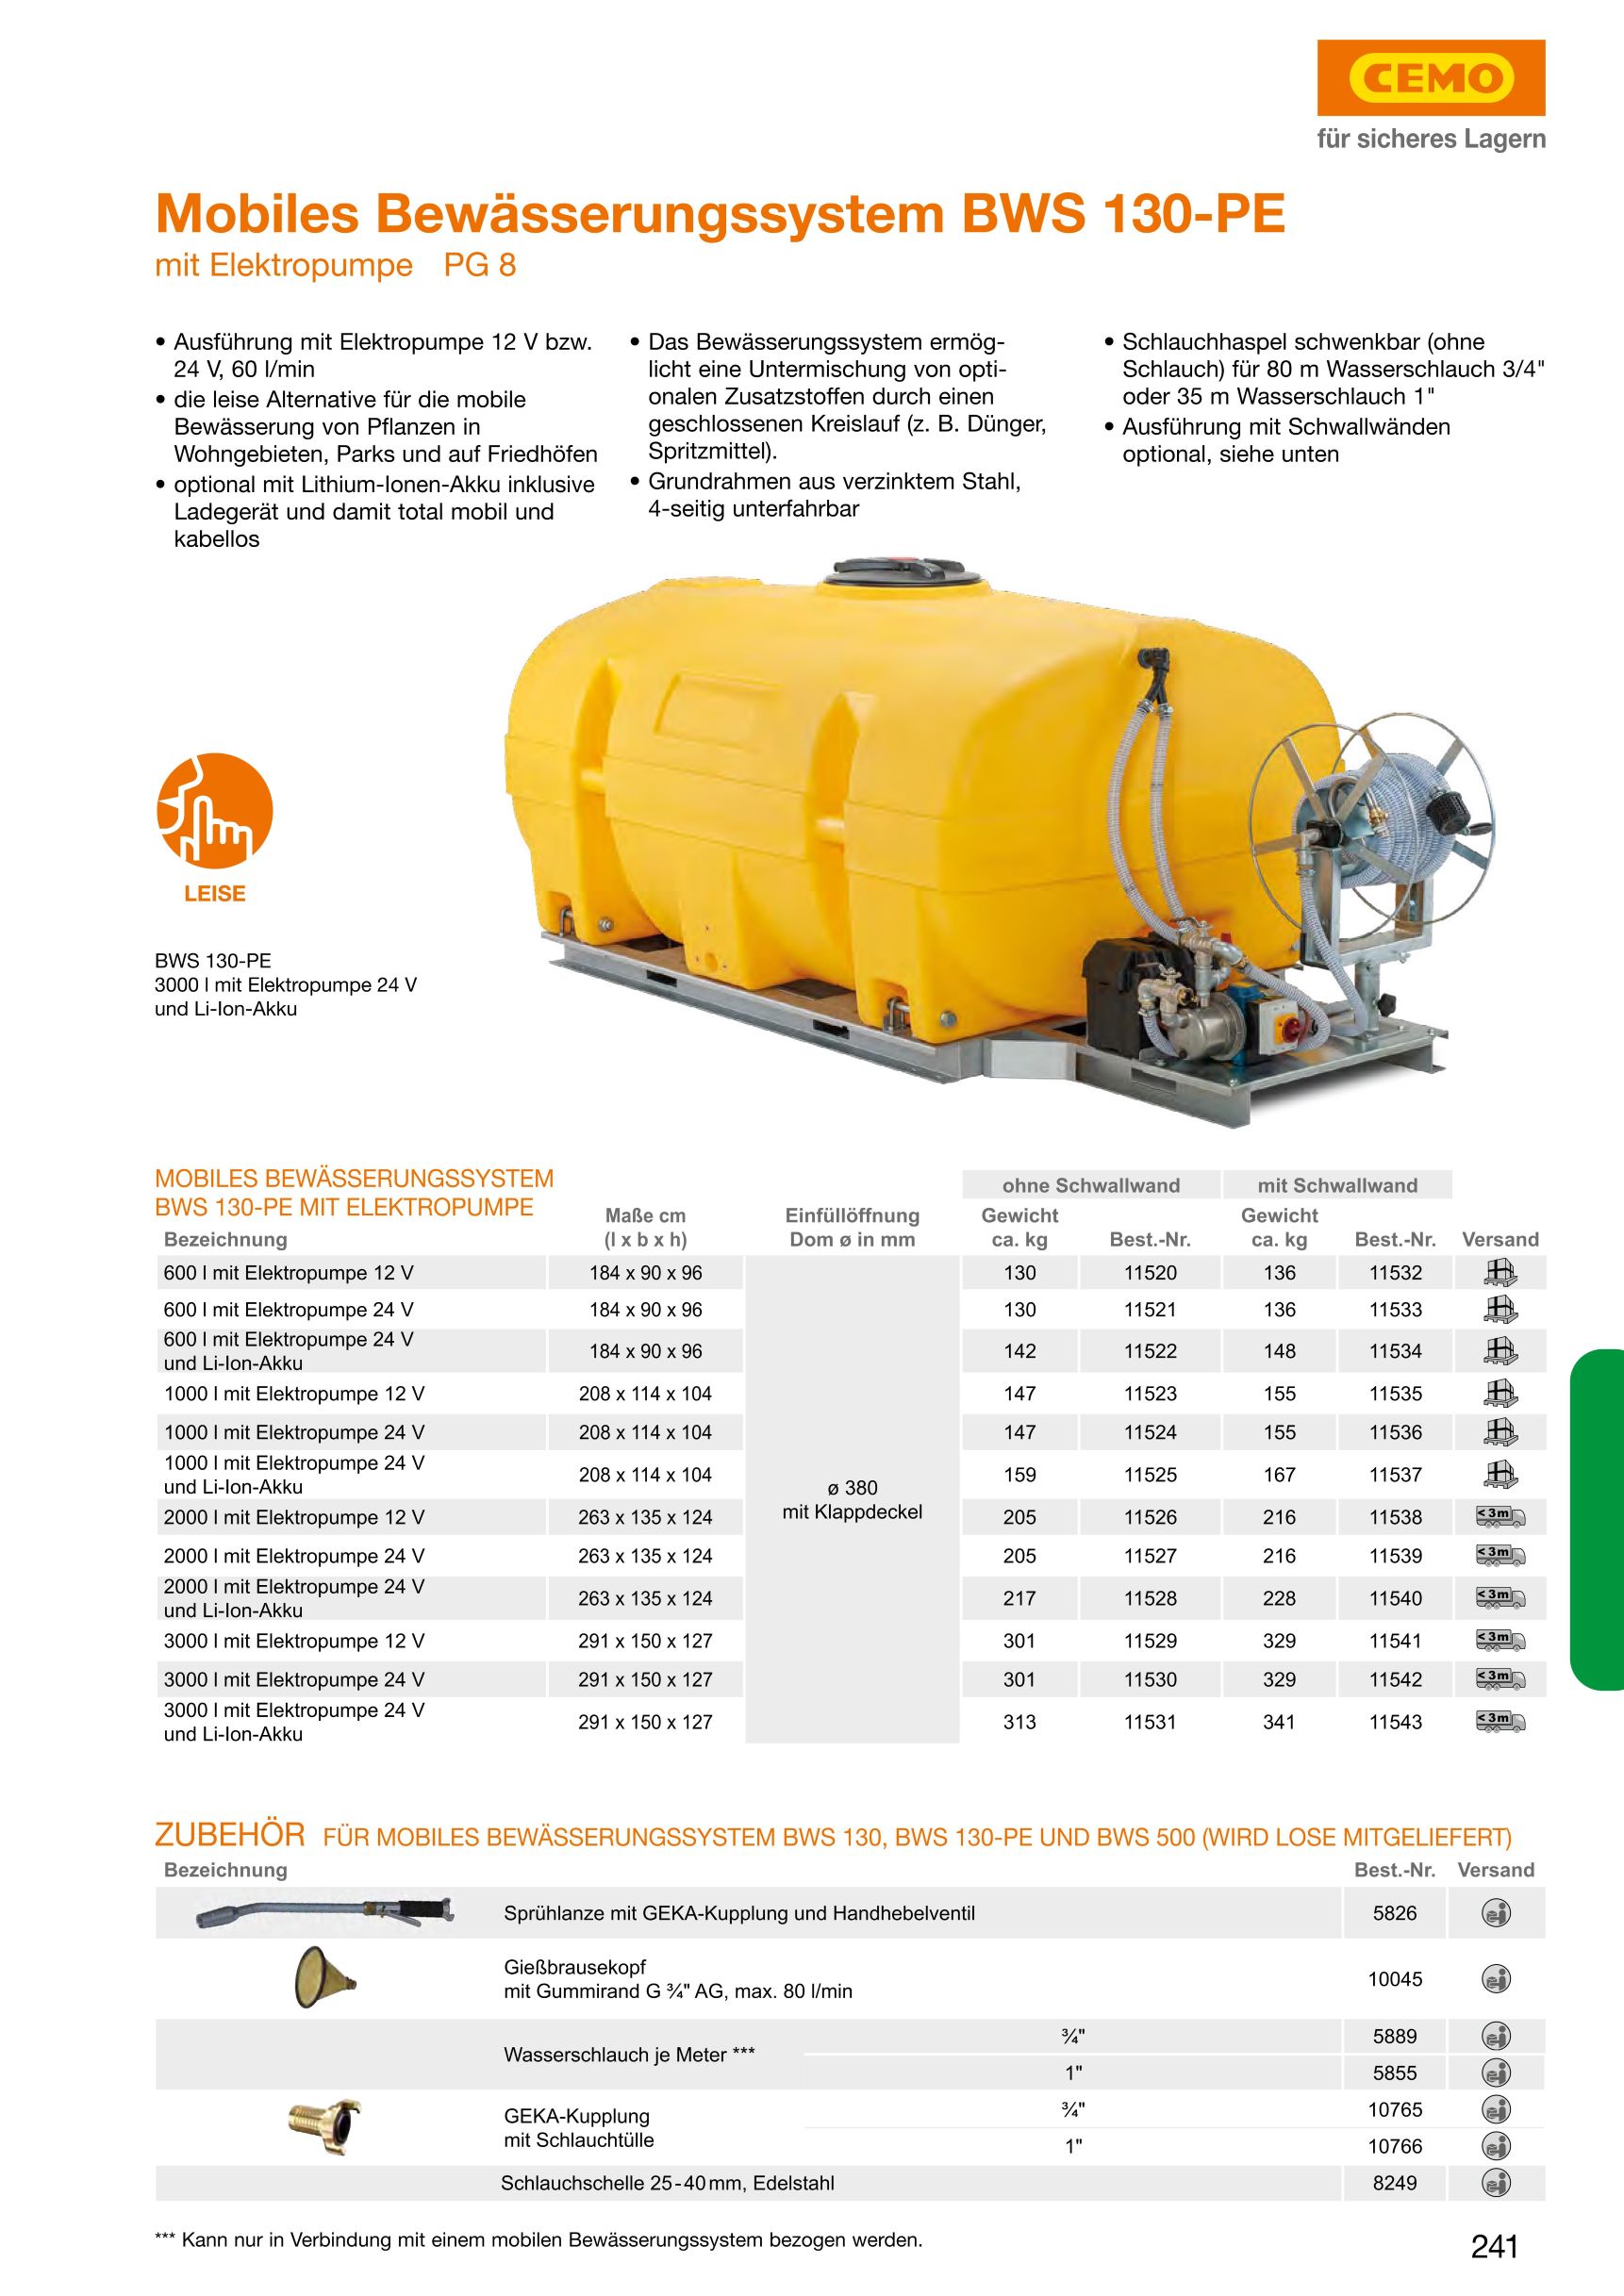 CEMO Mobiles Bewässerungssystem BWS 130-PE, 2000 l, 24 V Pumpe, Schwallwände - 11539